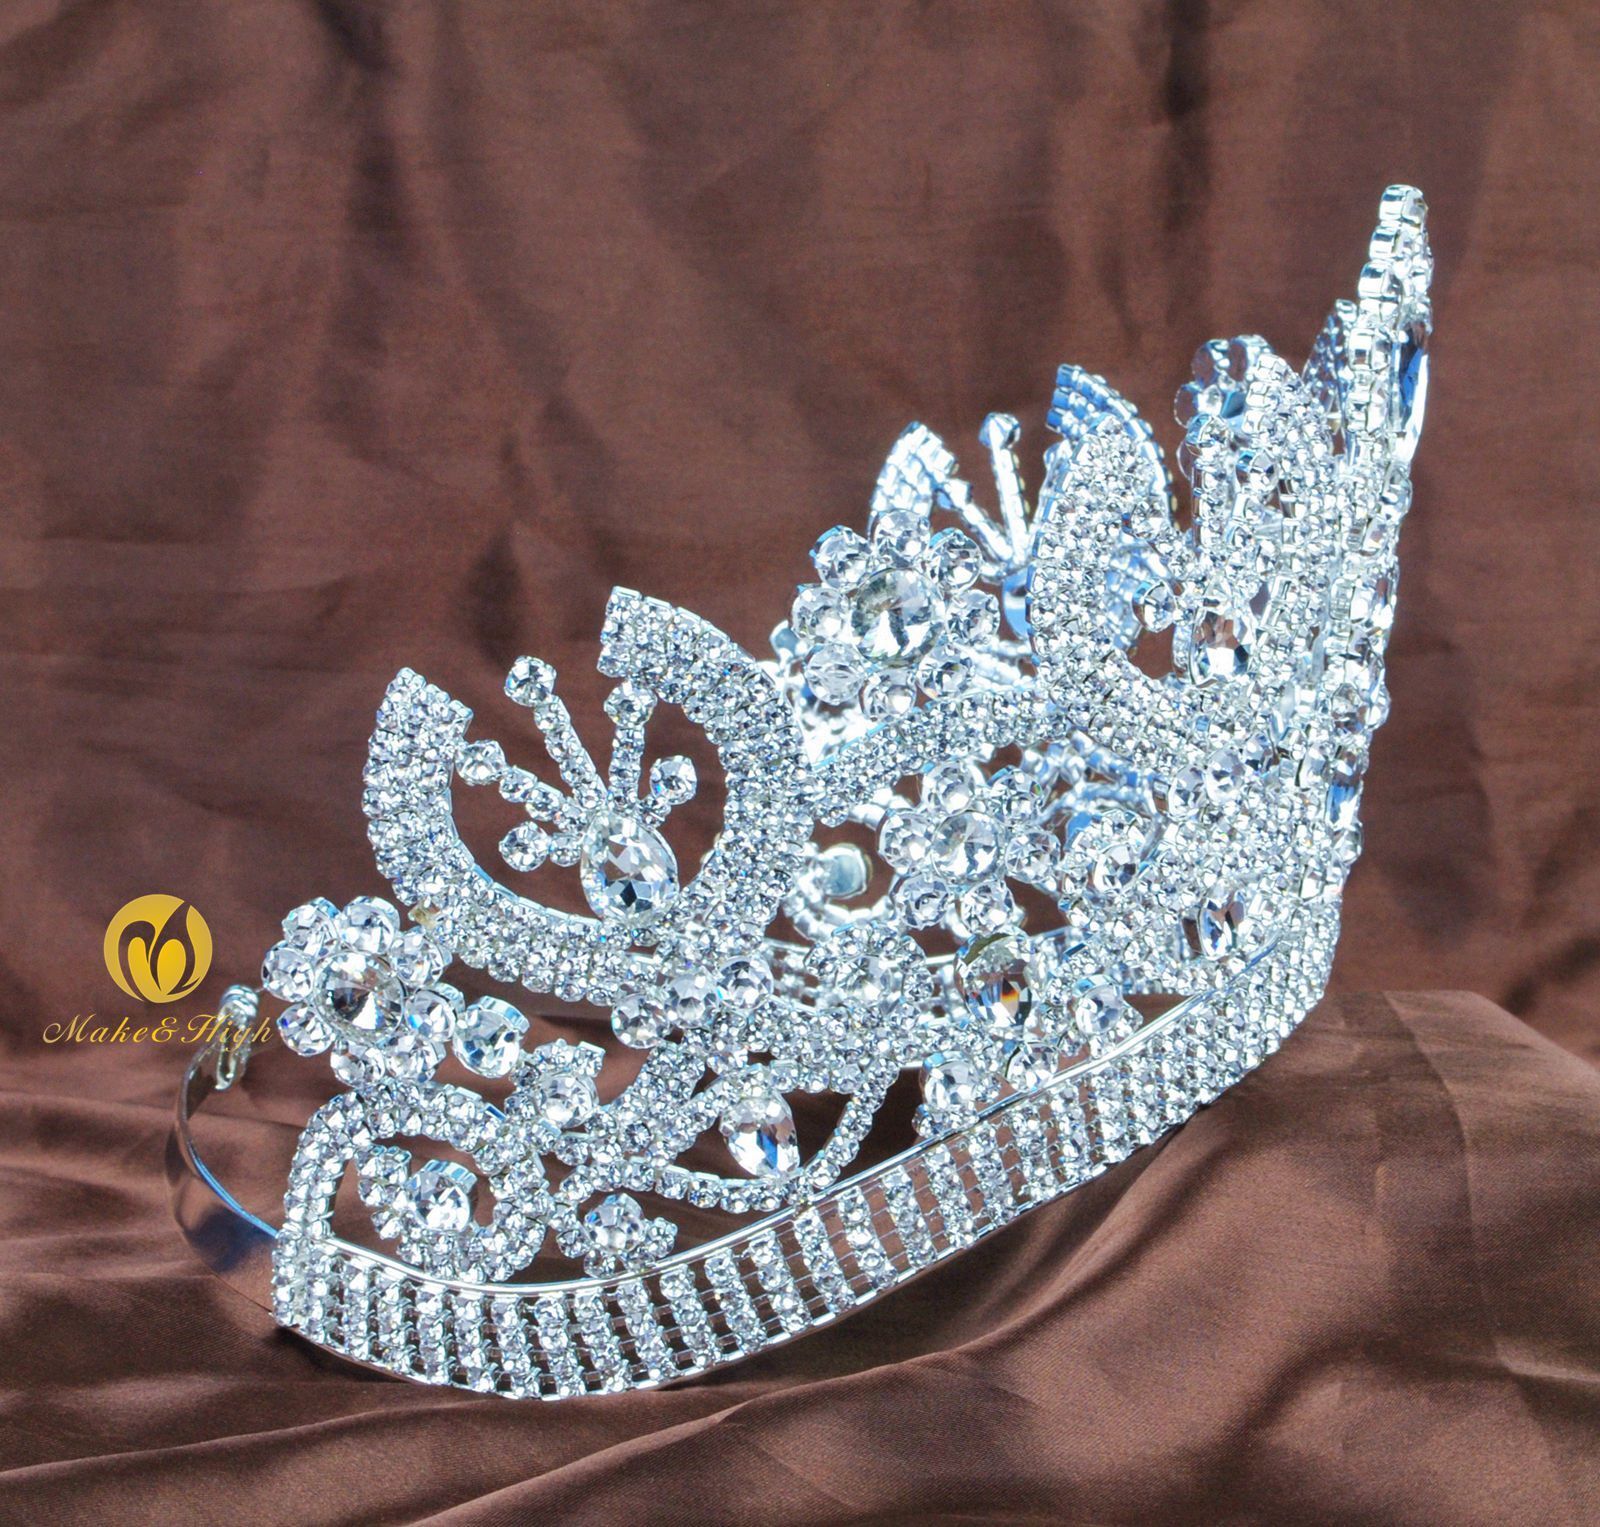 Luxurious Miss Pageant Tiara Crown Rhinestone Women Headband Wedding Parade Prom